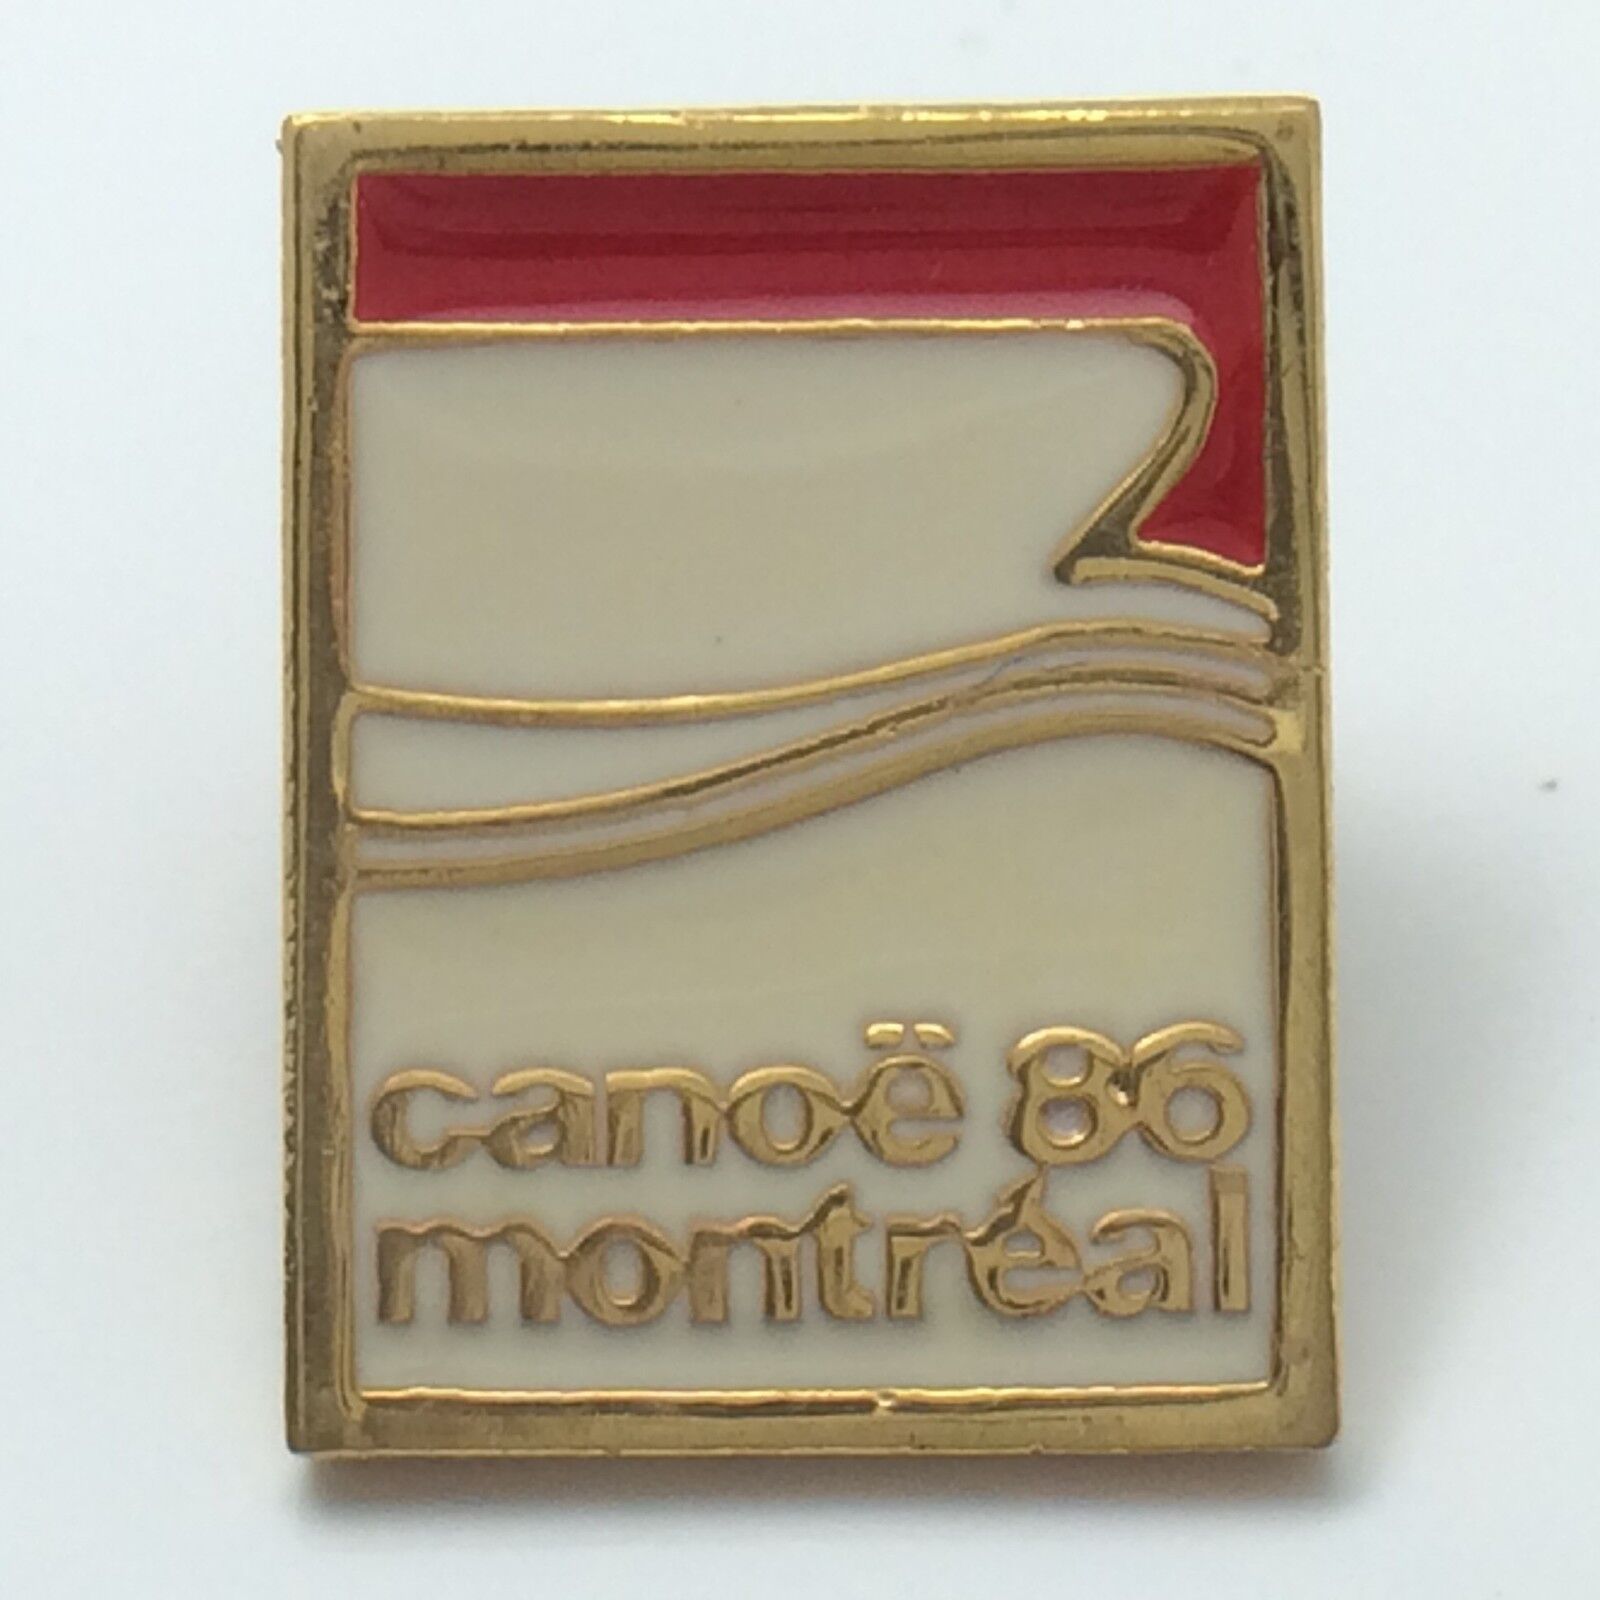 1986 Canoe Montreal Olympic Canada Pin F948